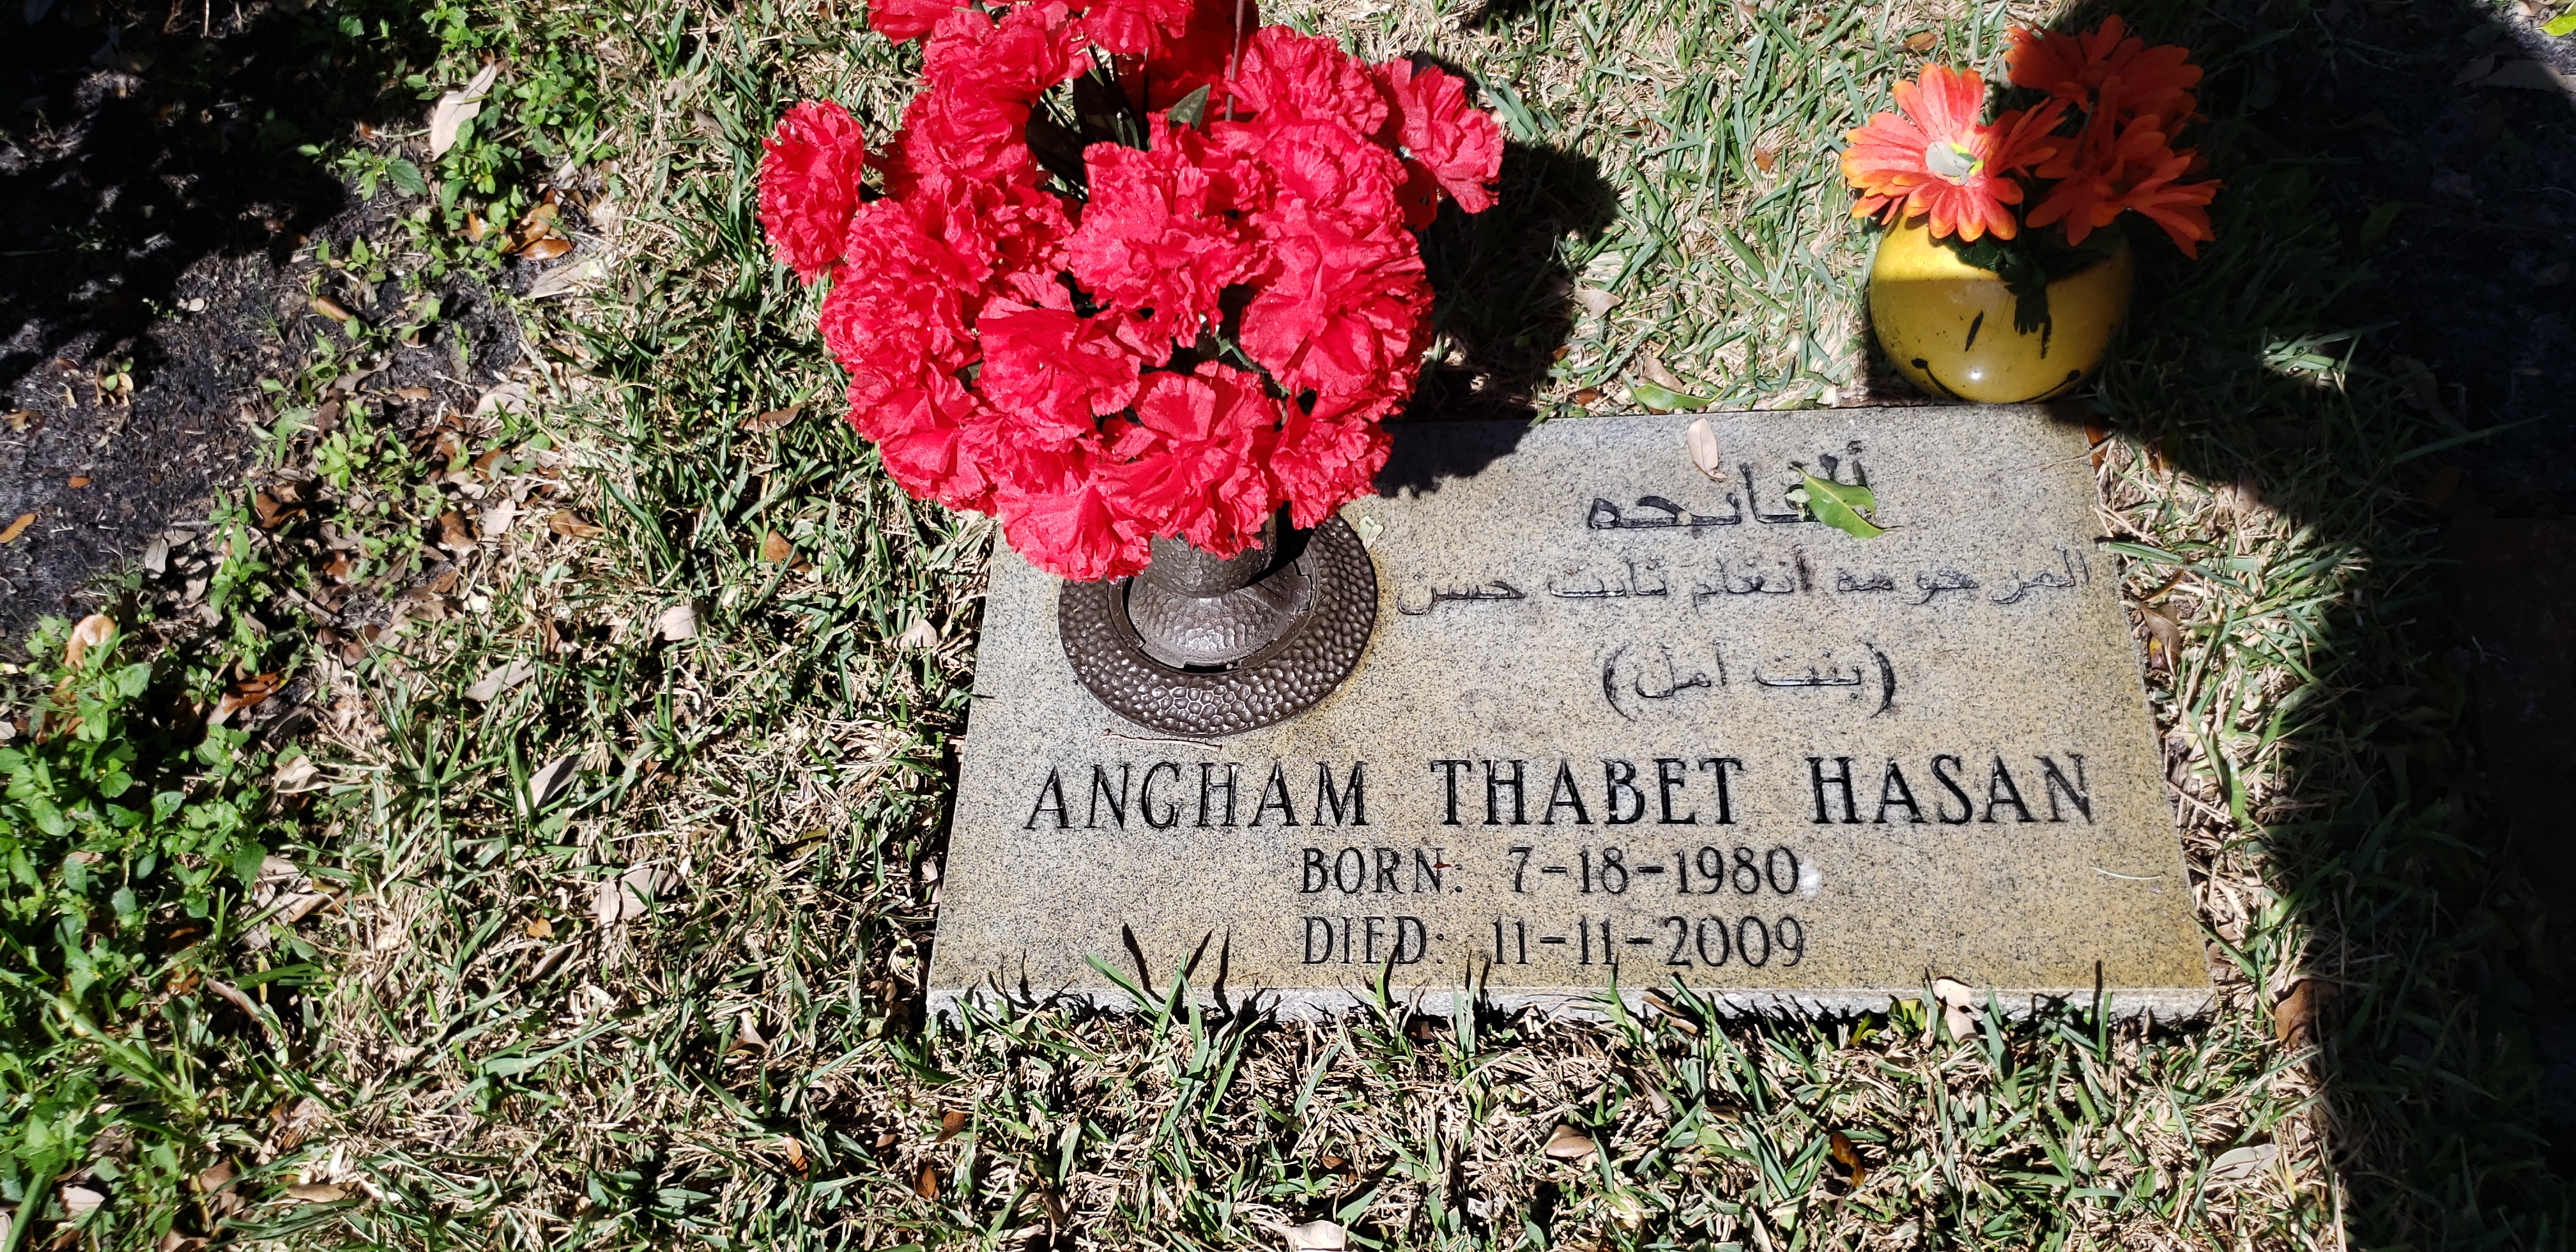 Angham Thabet Hasan